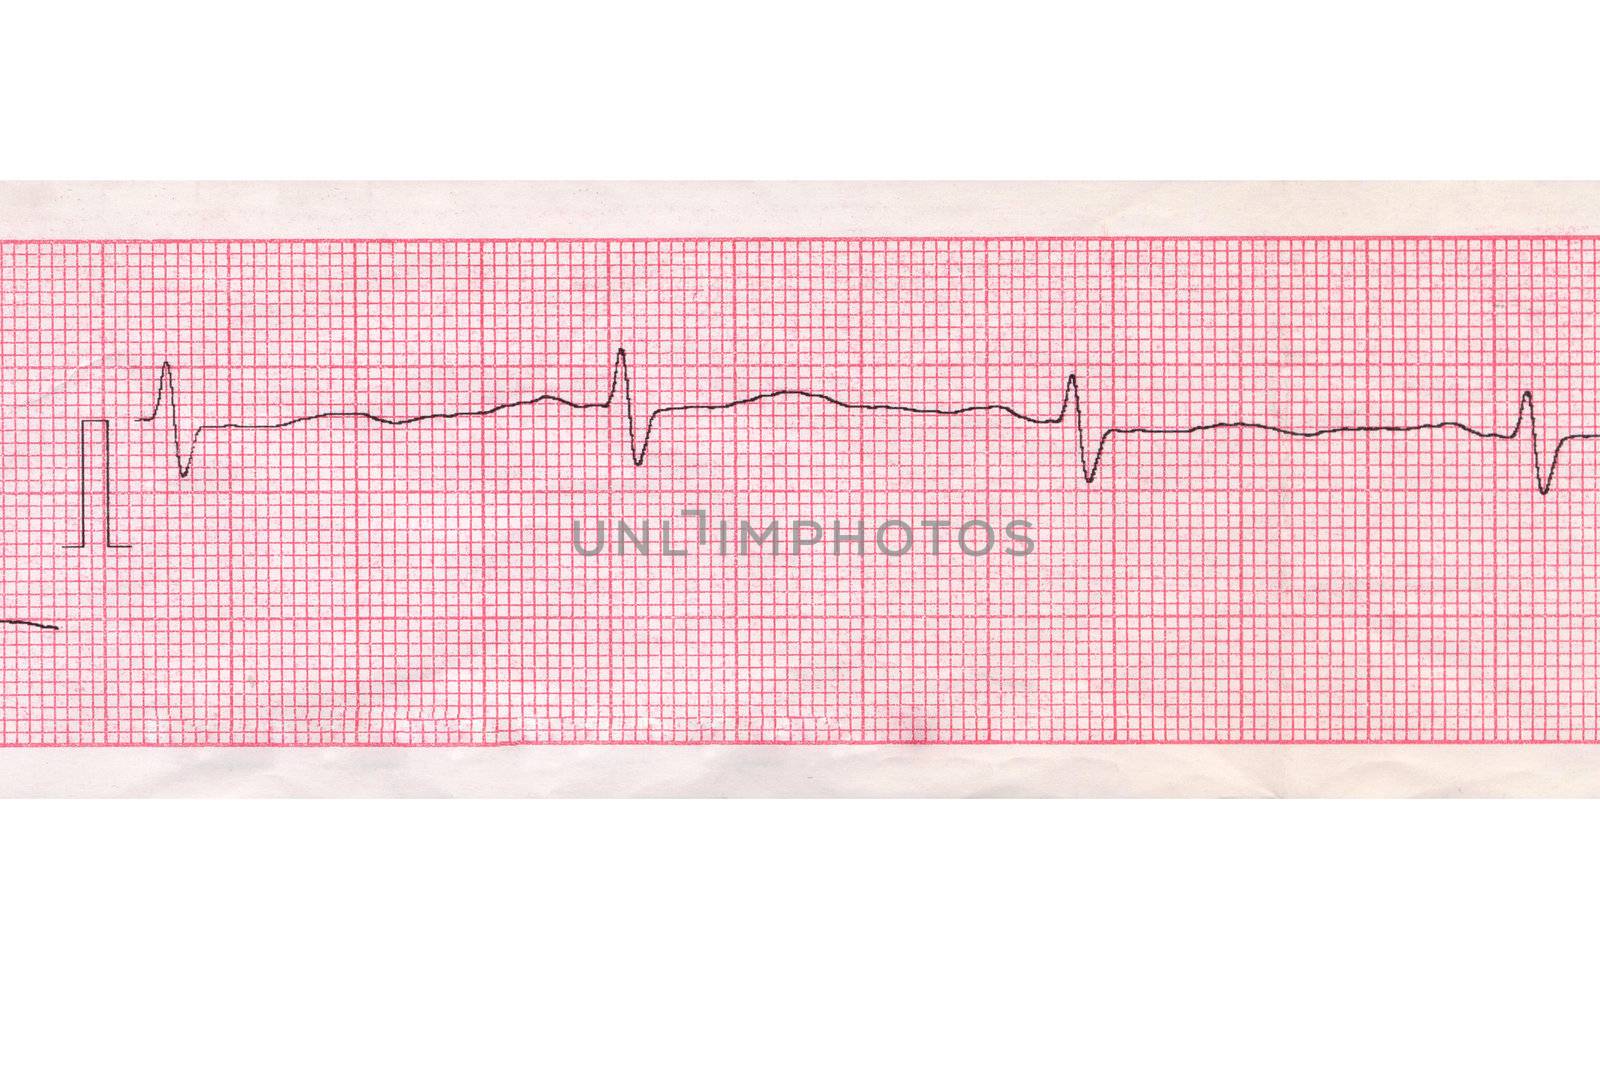 Heart analysis scheme  by petrkurgan